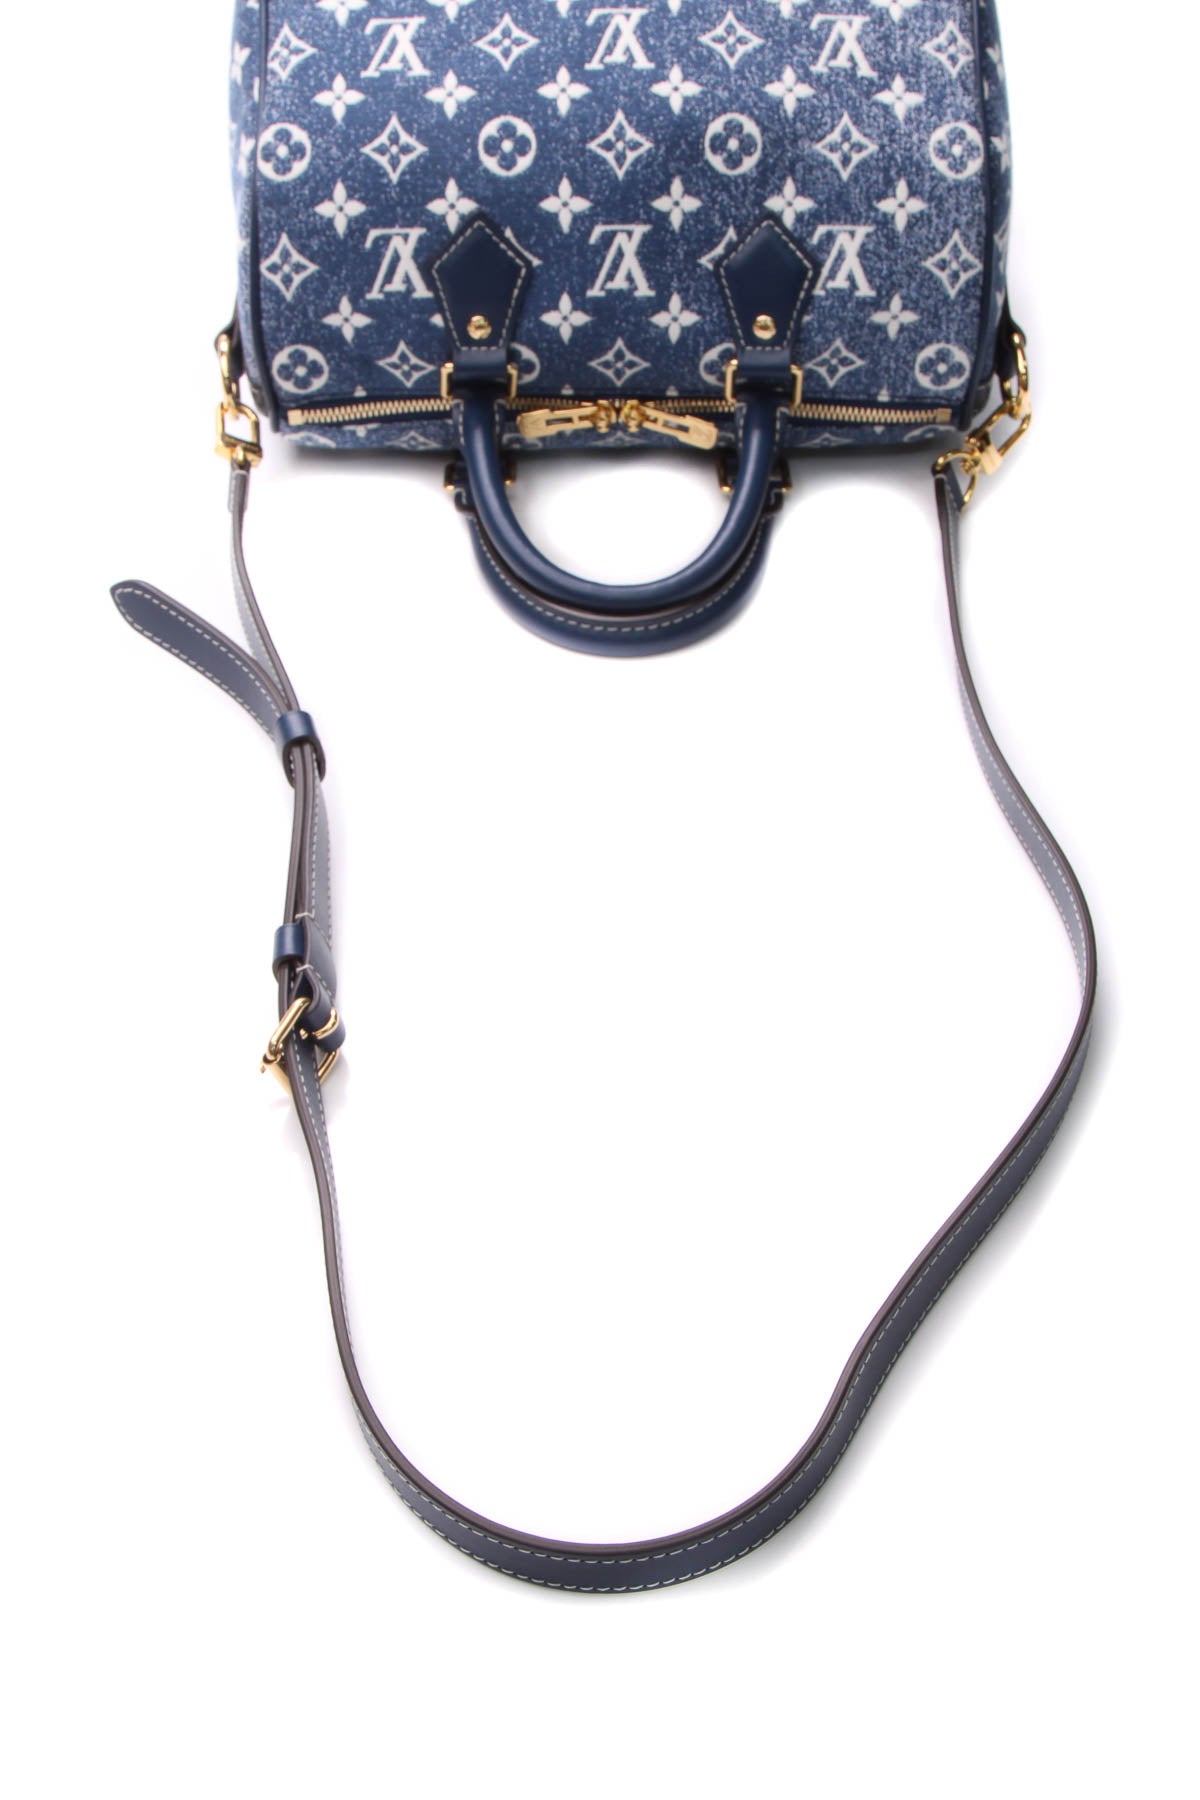 Louis Vuitton X Fornasetti Speedy 25 Bandouliere - Couture USA